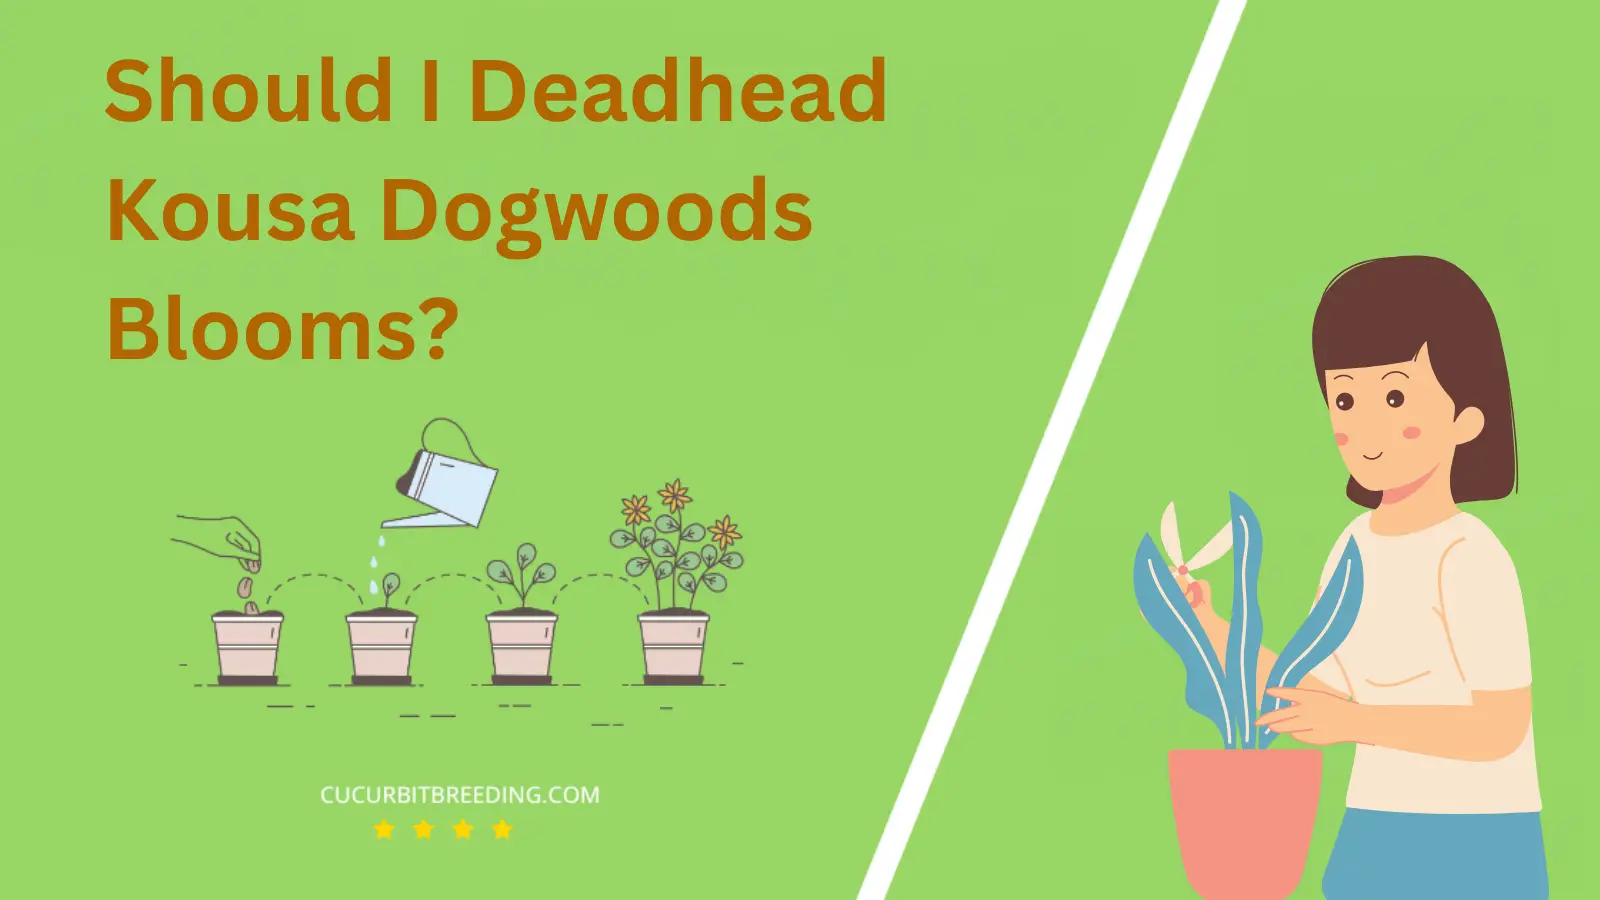 Should I Deadhead Kousa Dogwoods Blooms?